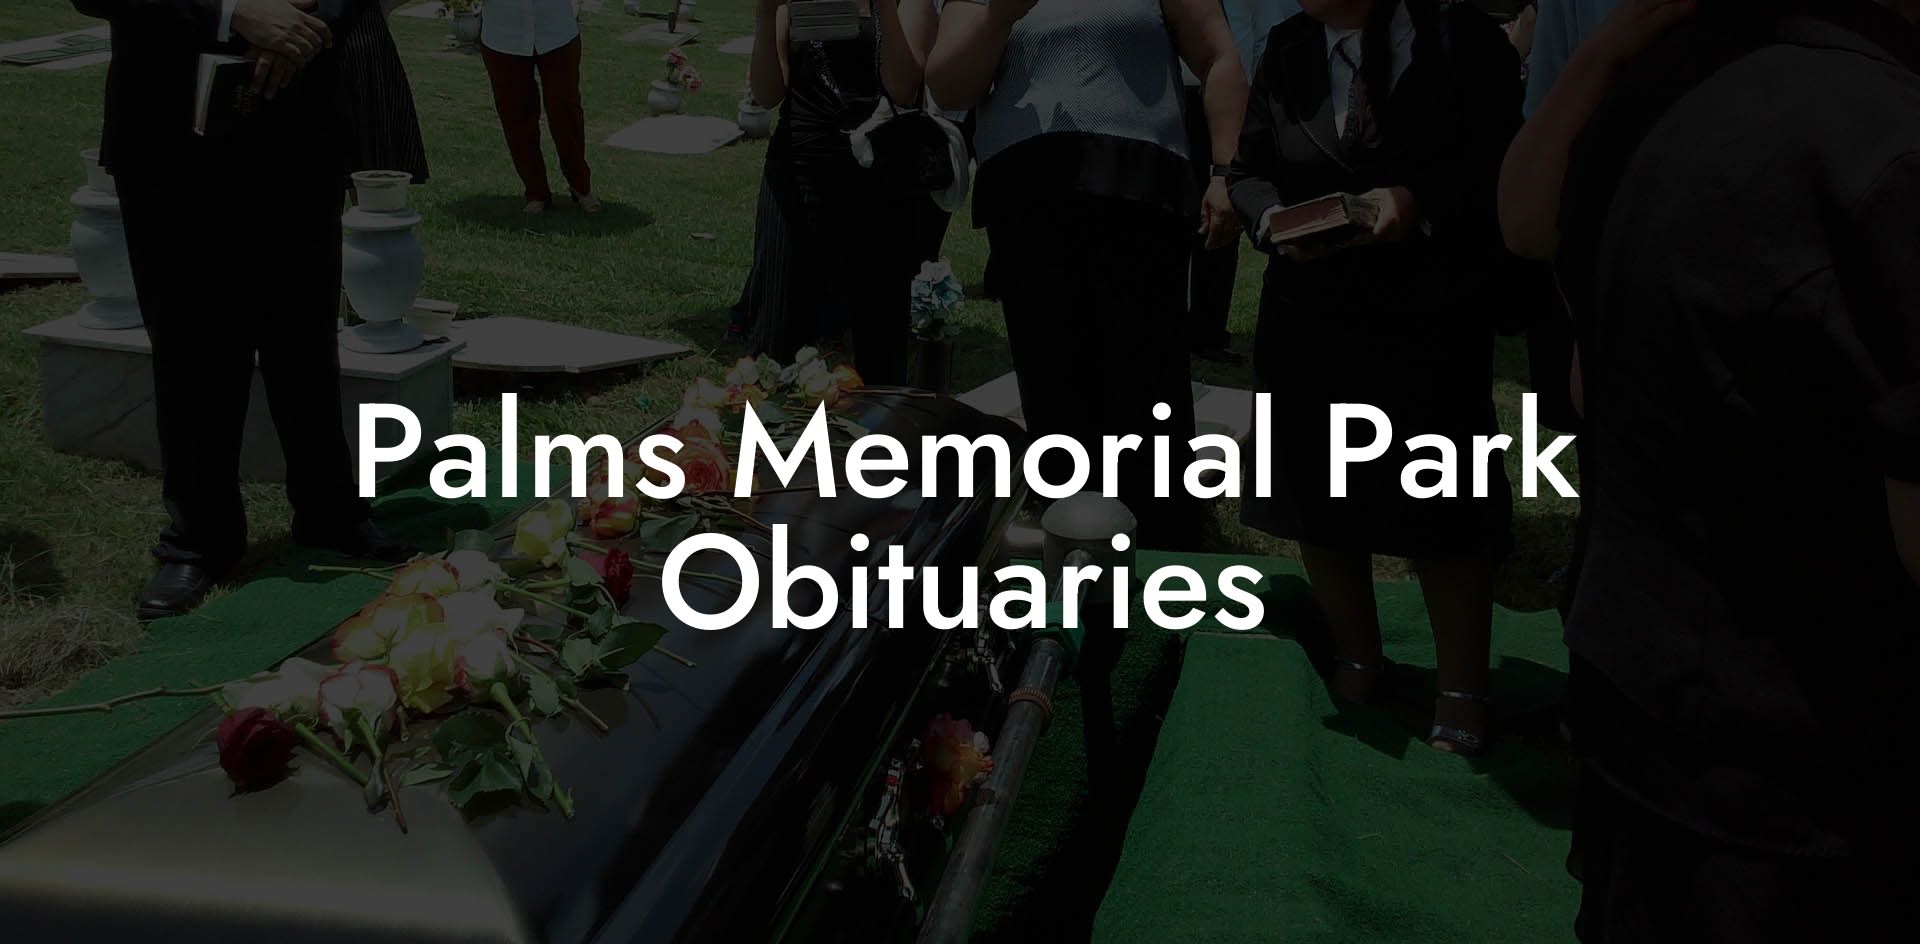 Palms Memorial Park Obituaries